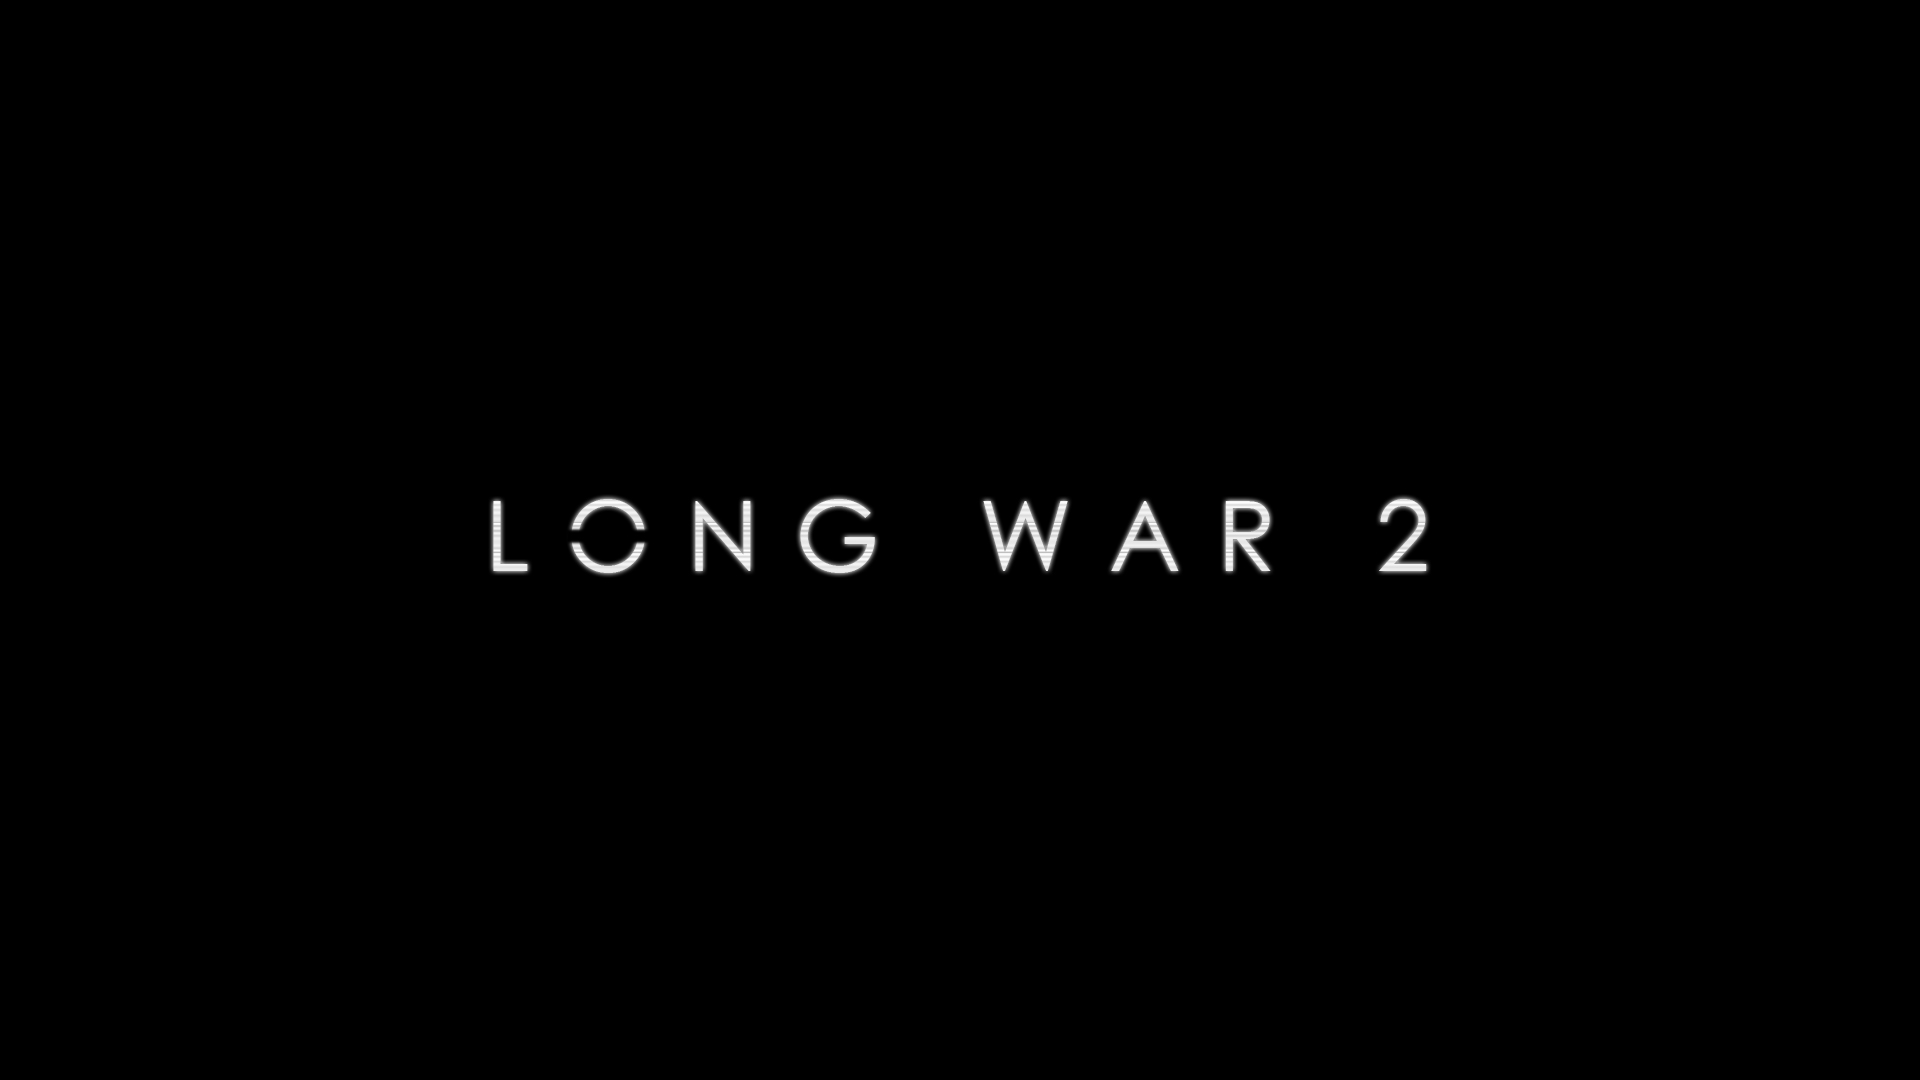 xcom long war 2 strategy